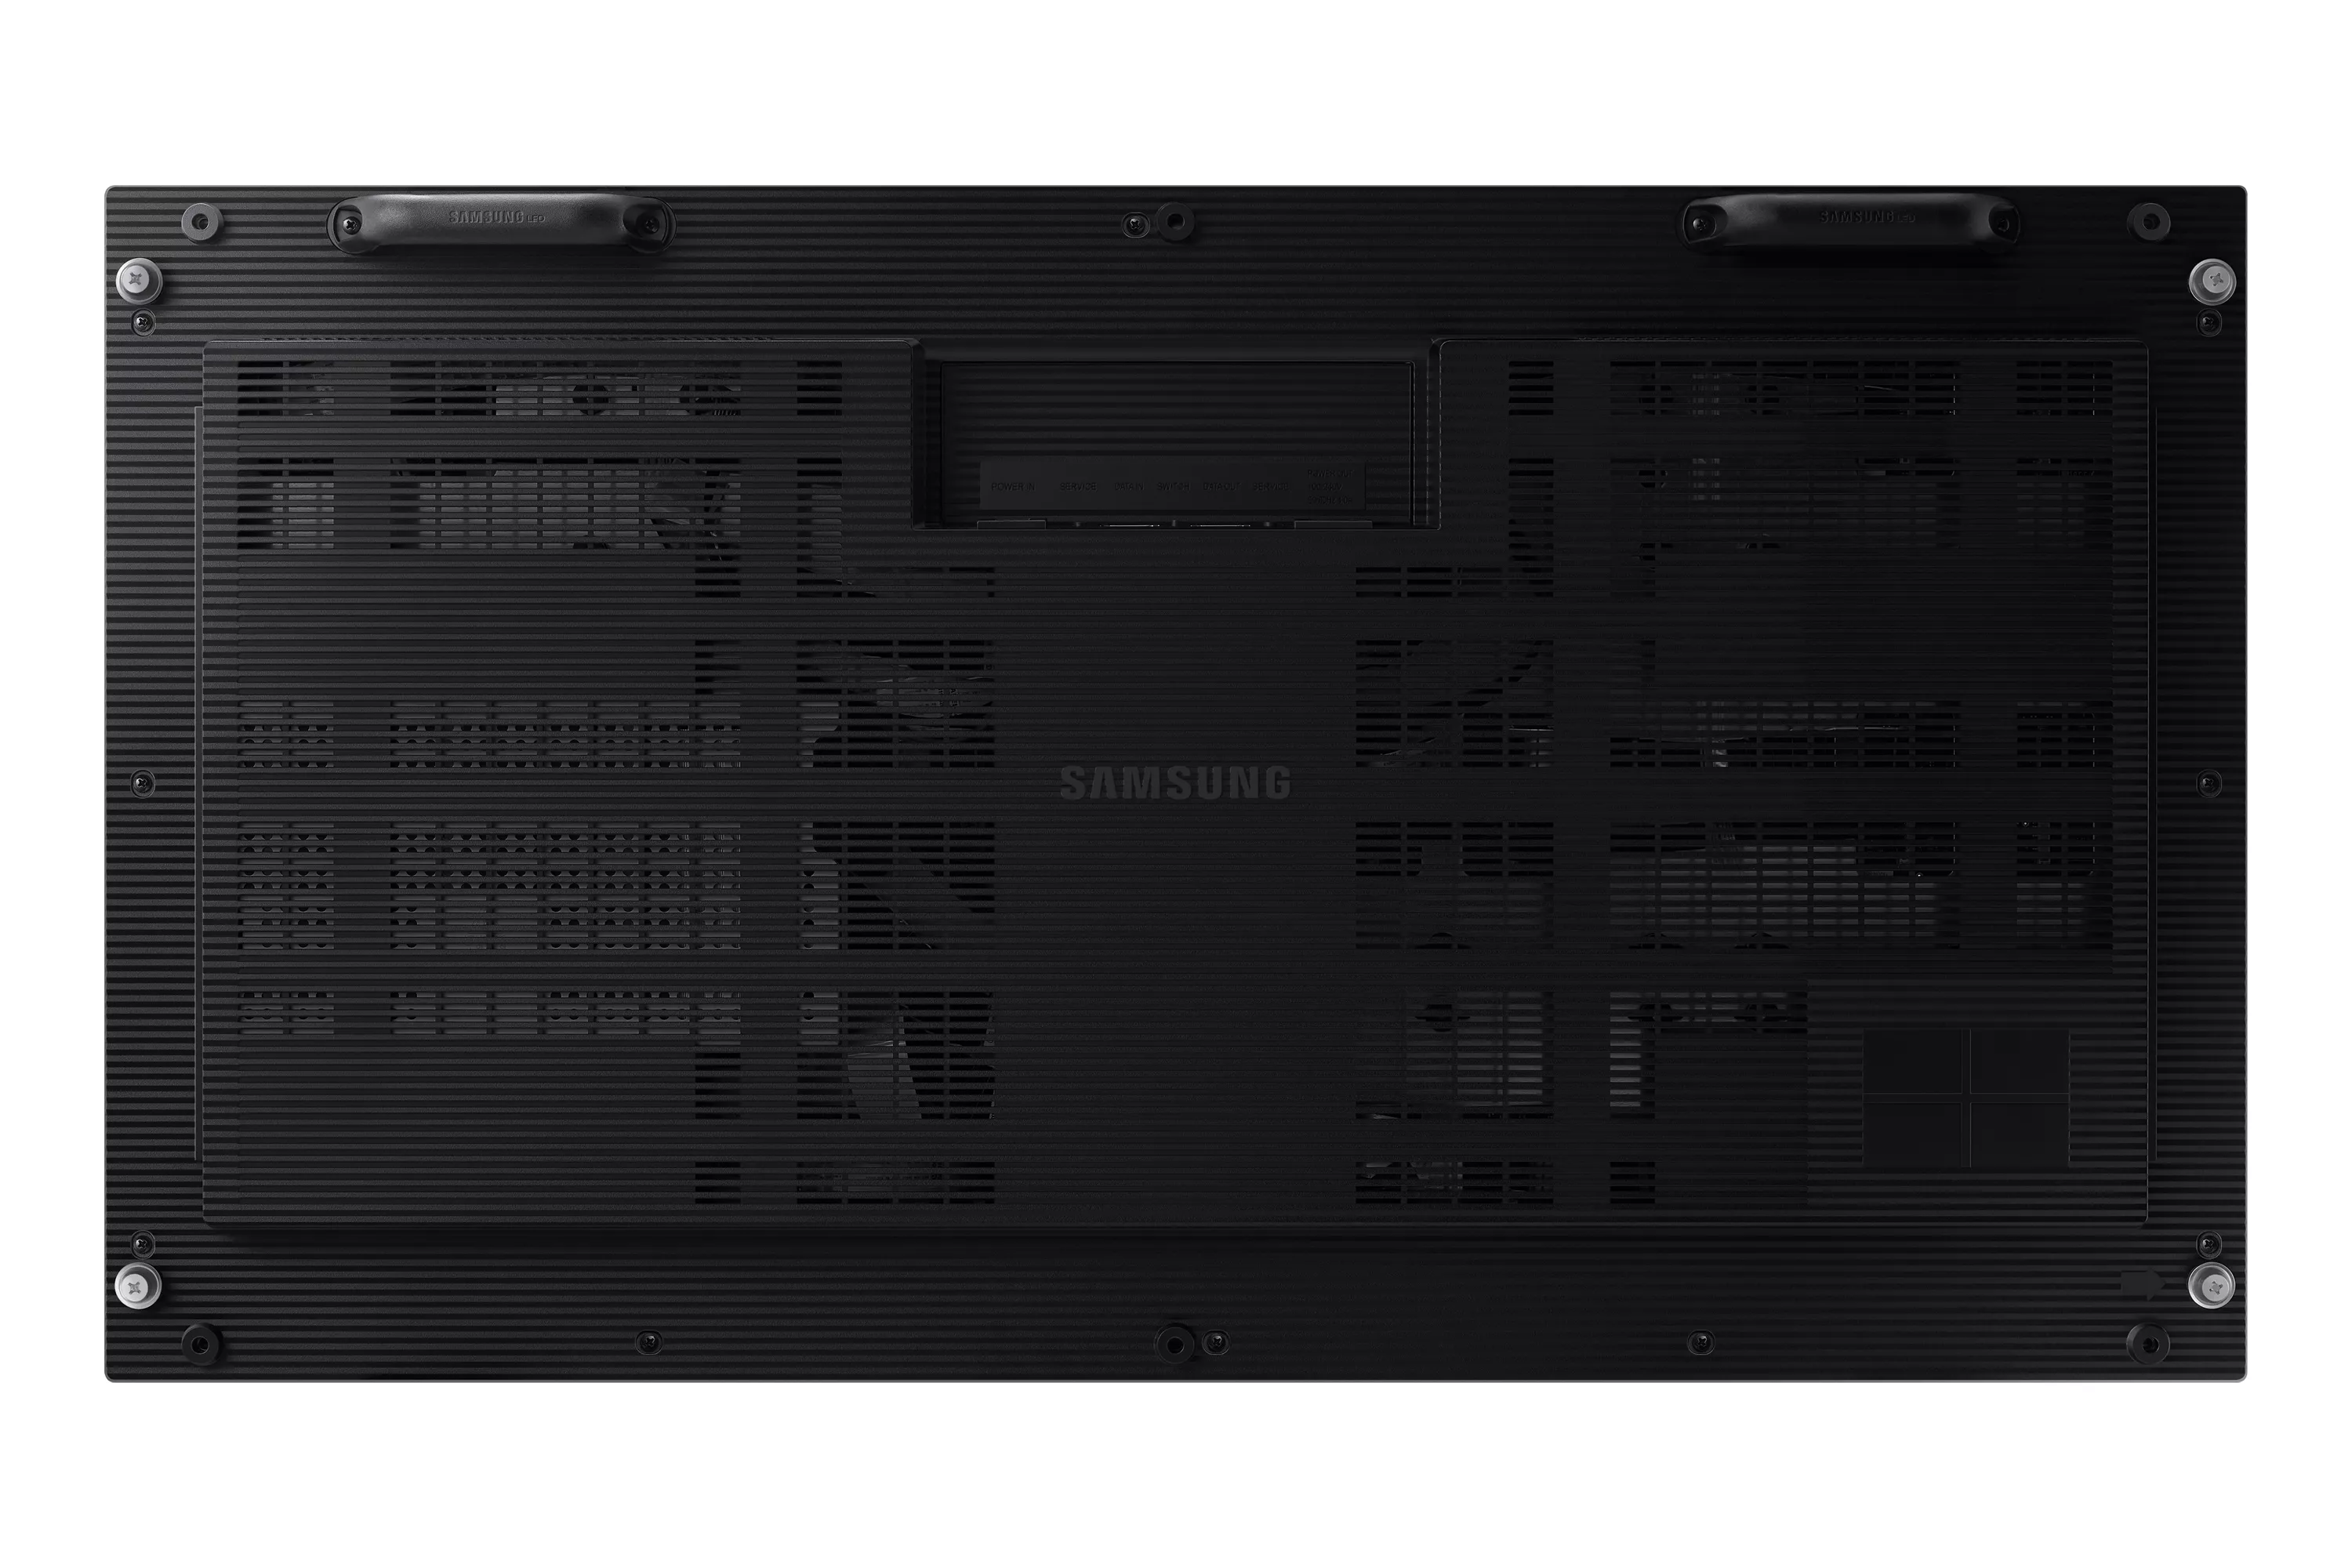 Vente Samsung IF015R Samsung au meilleur prix - visuel 2